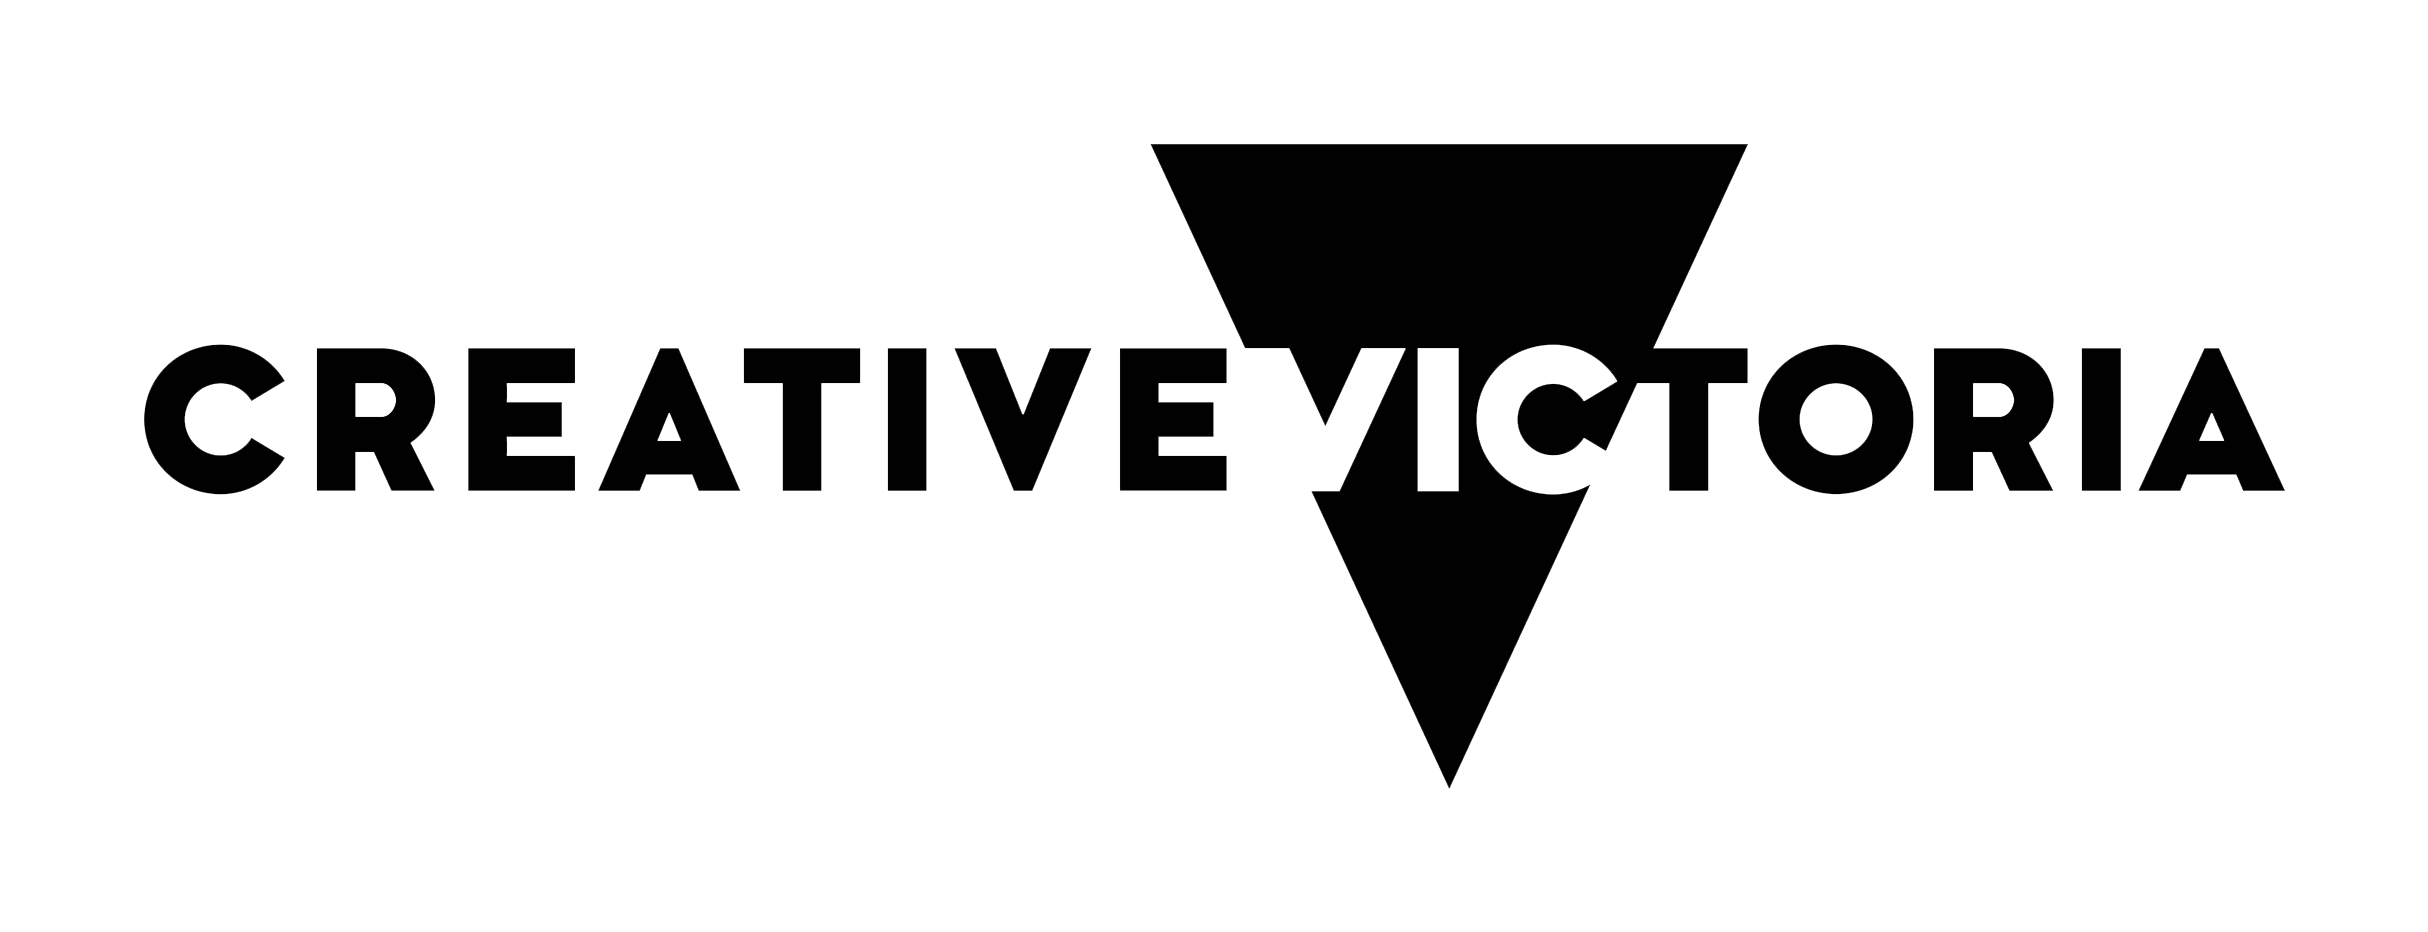 creativevictoria logo screen clear